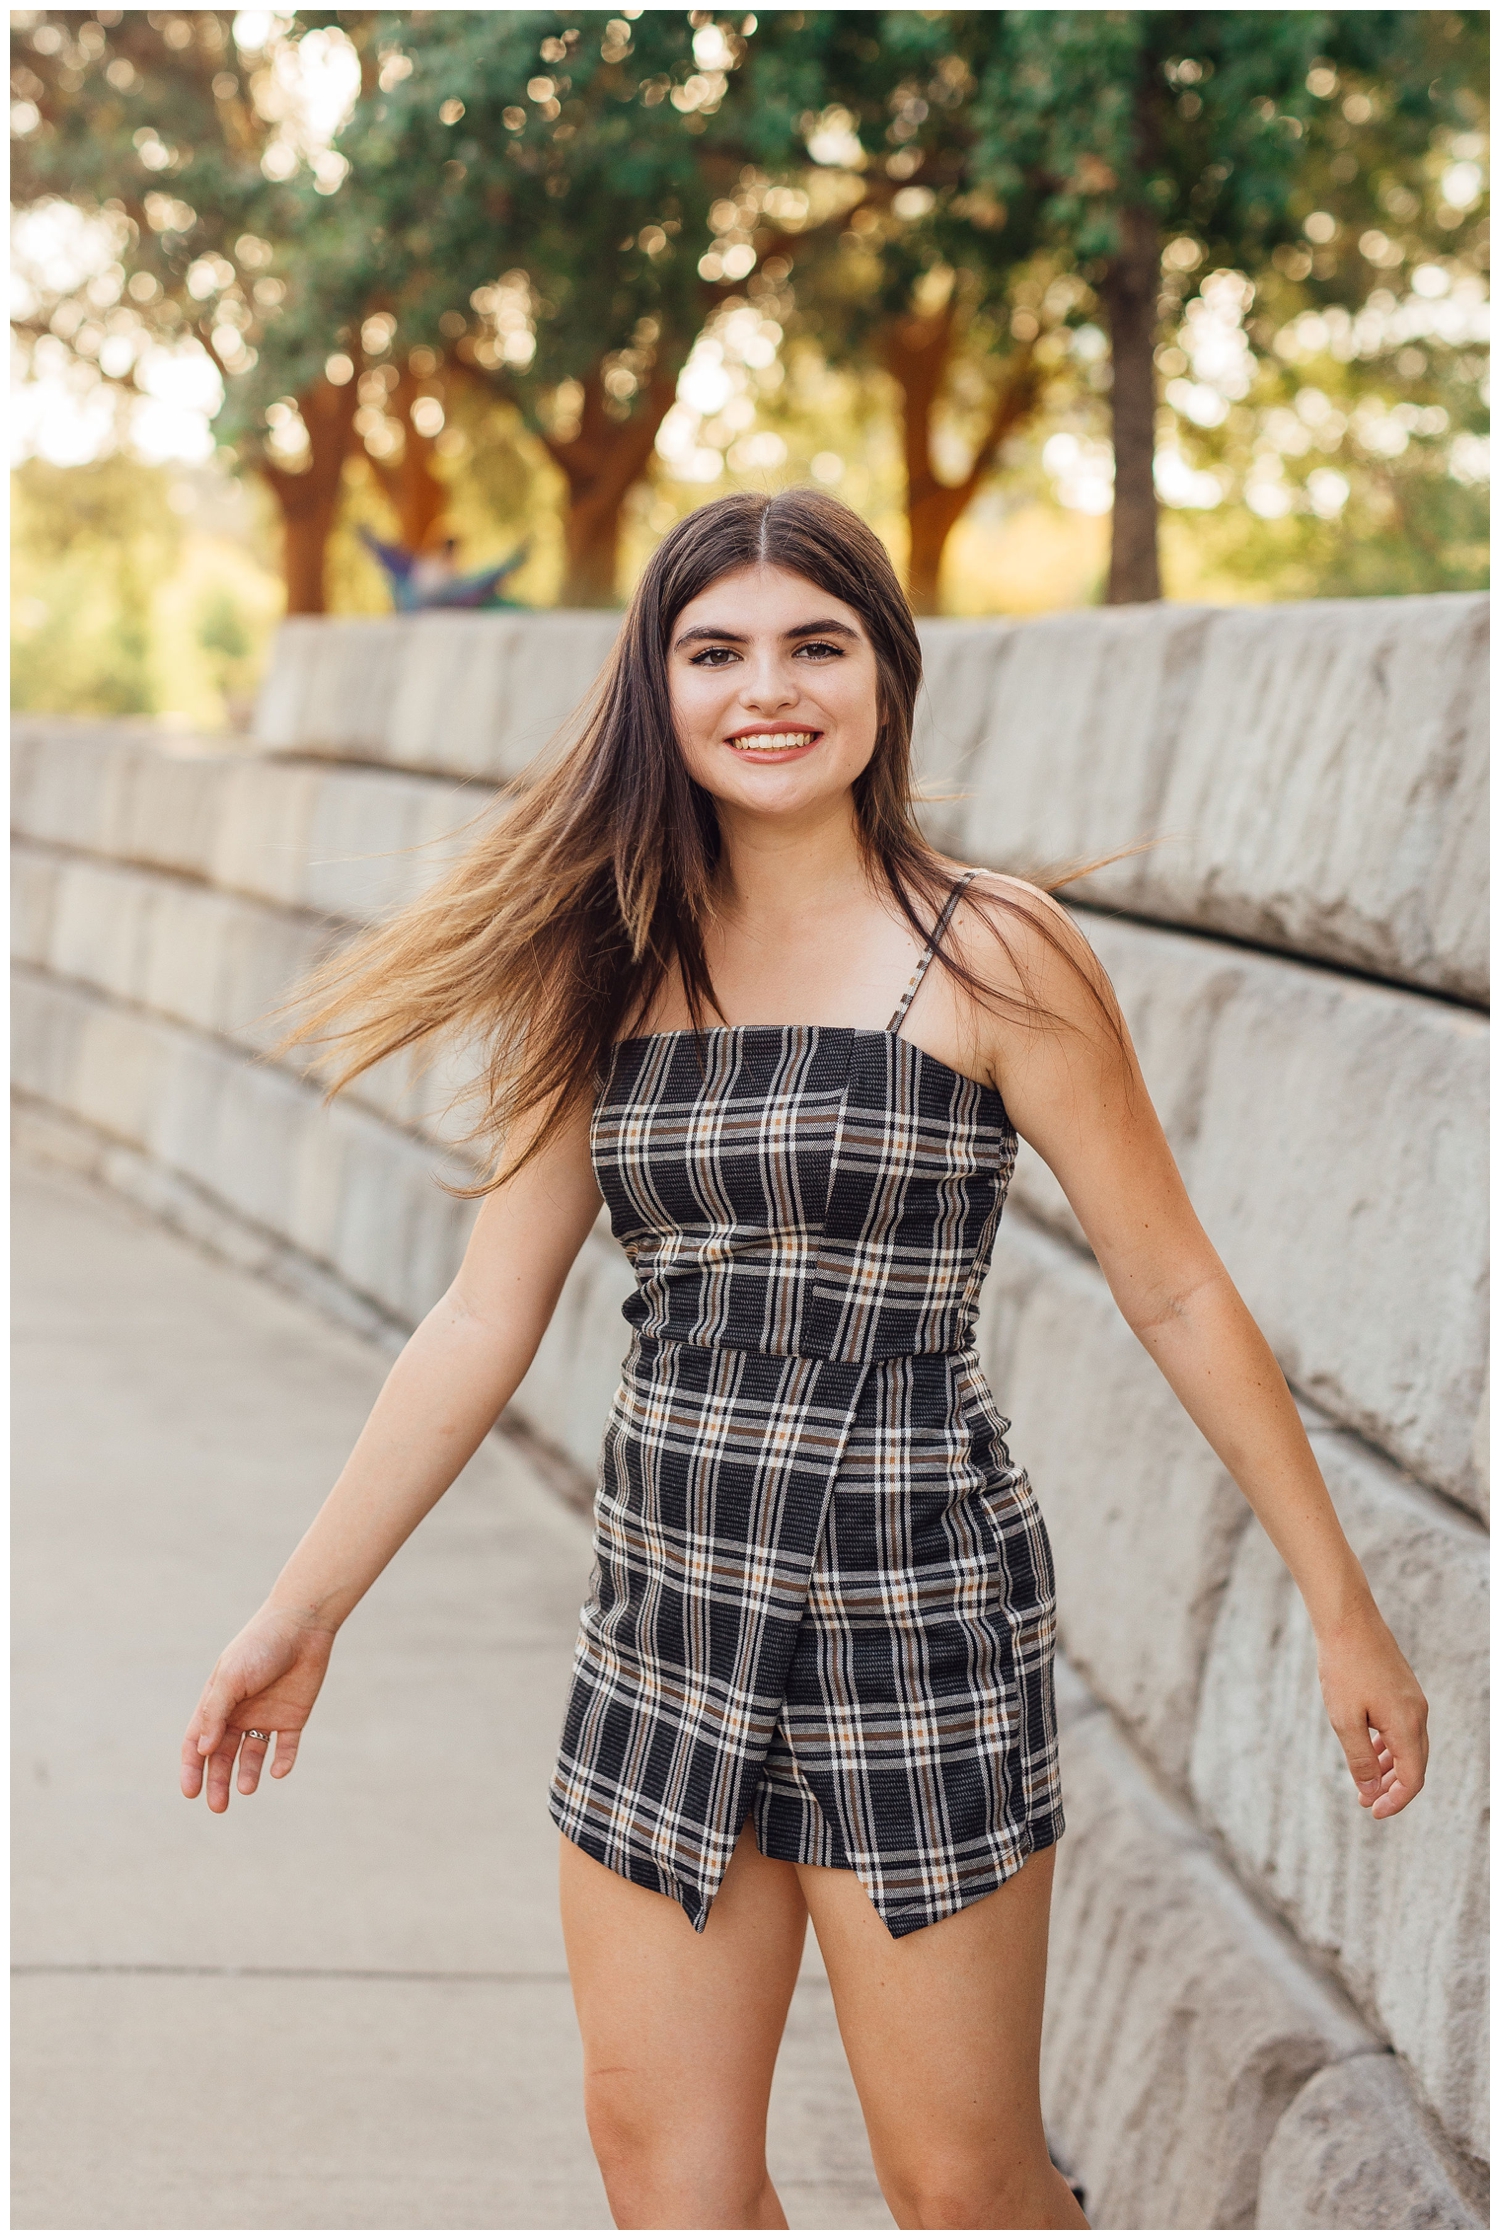 high school senior portrait with girl twirling in black plaid dress